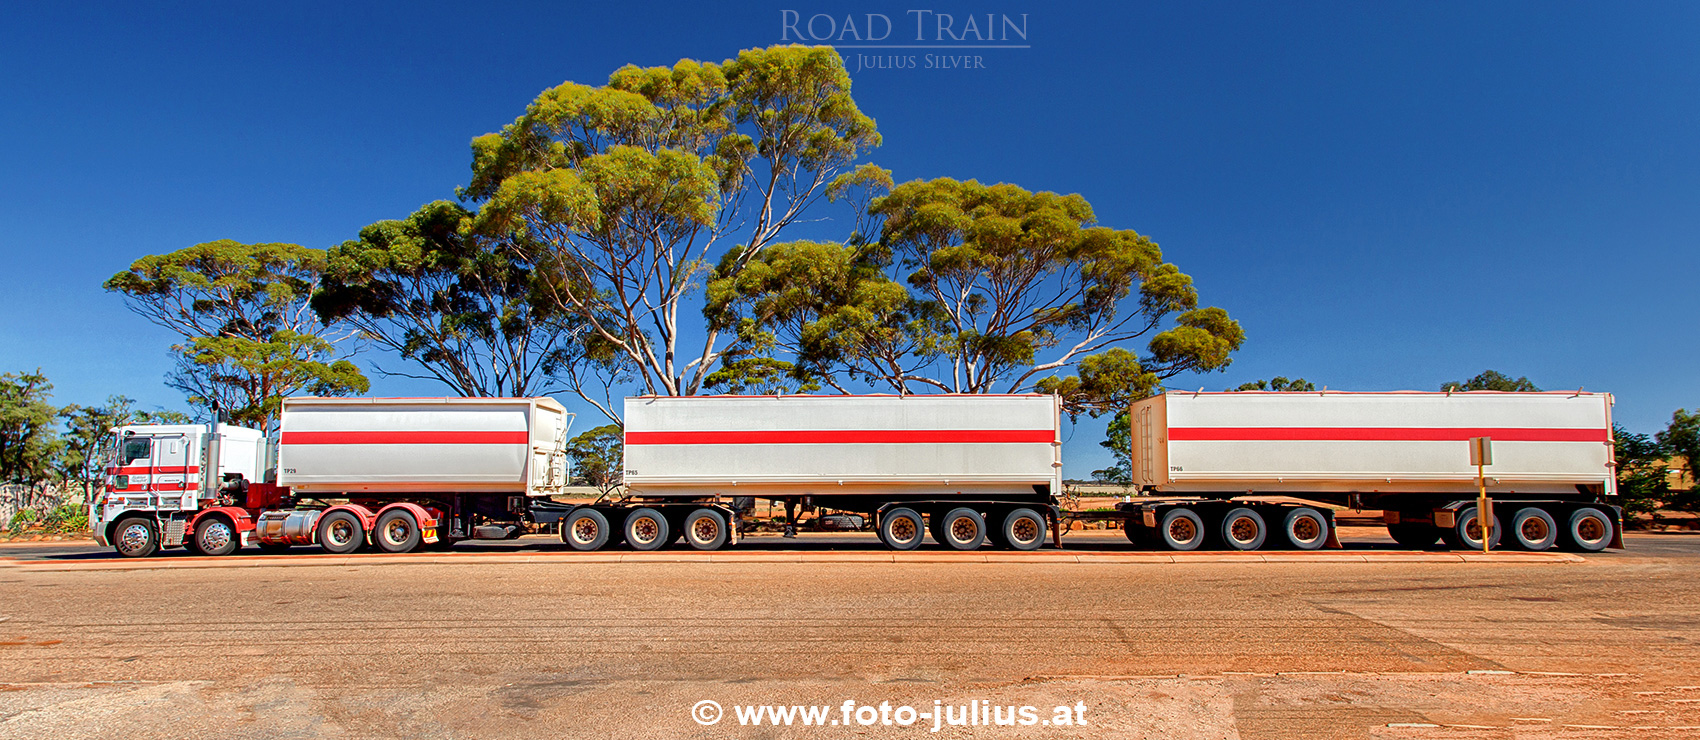 Australia_231a_Road-Train.jpg, 741kB